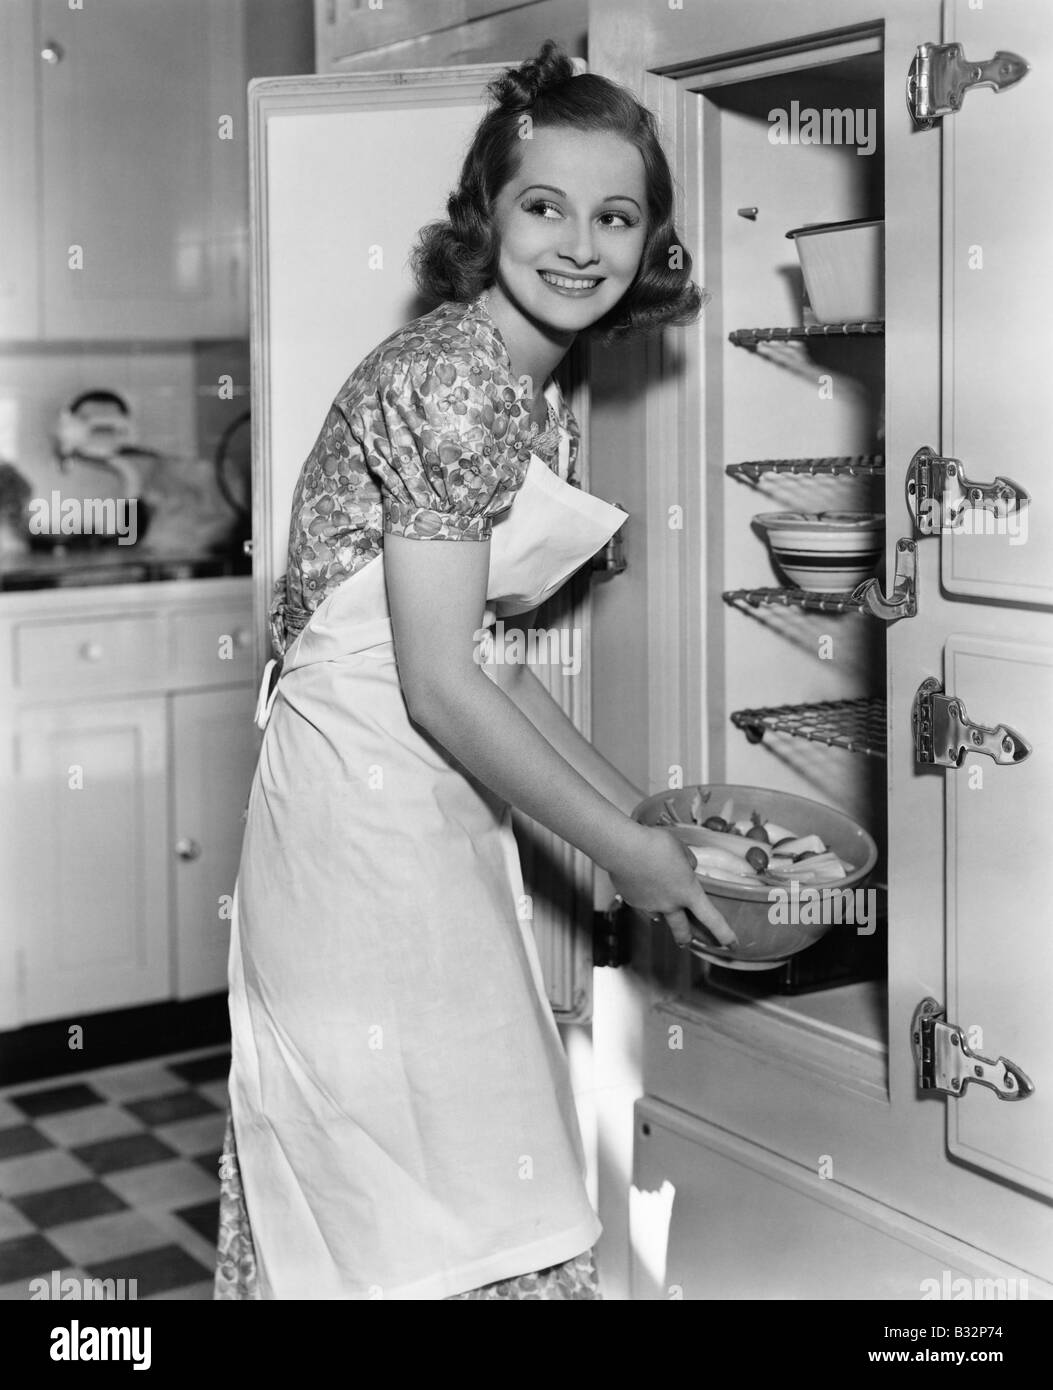 Portrait of woman in kitchen Banque D'Images